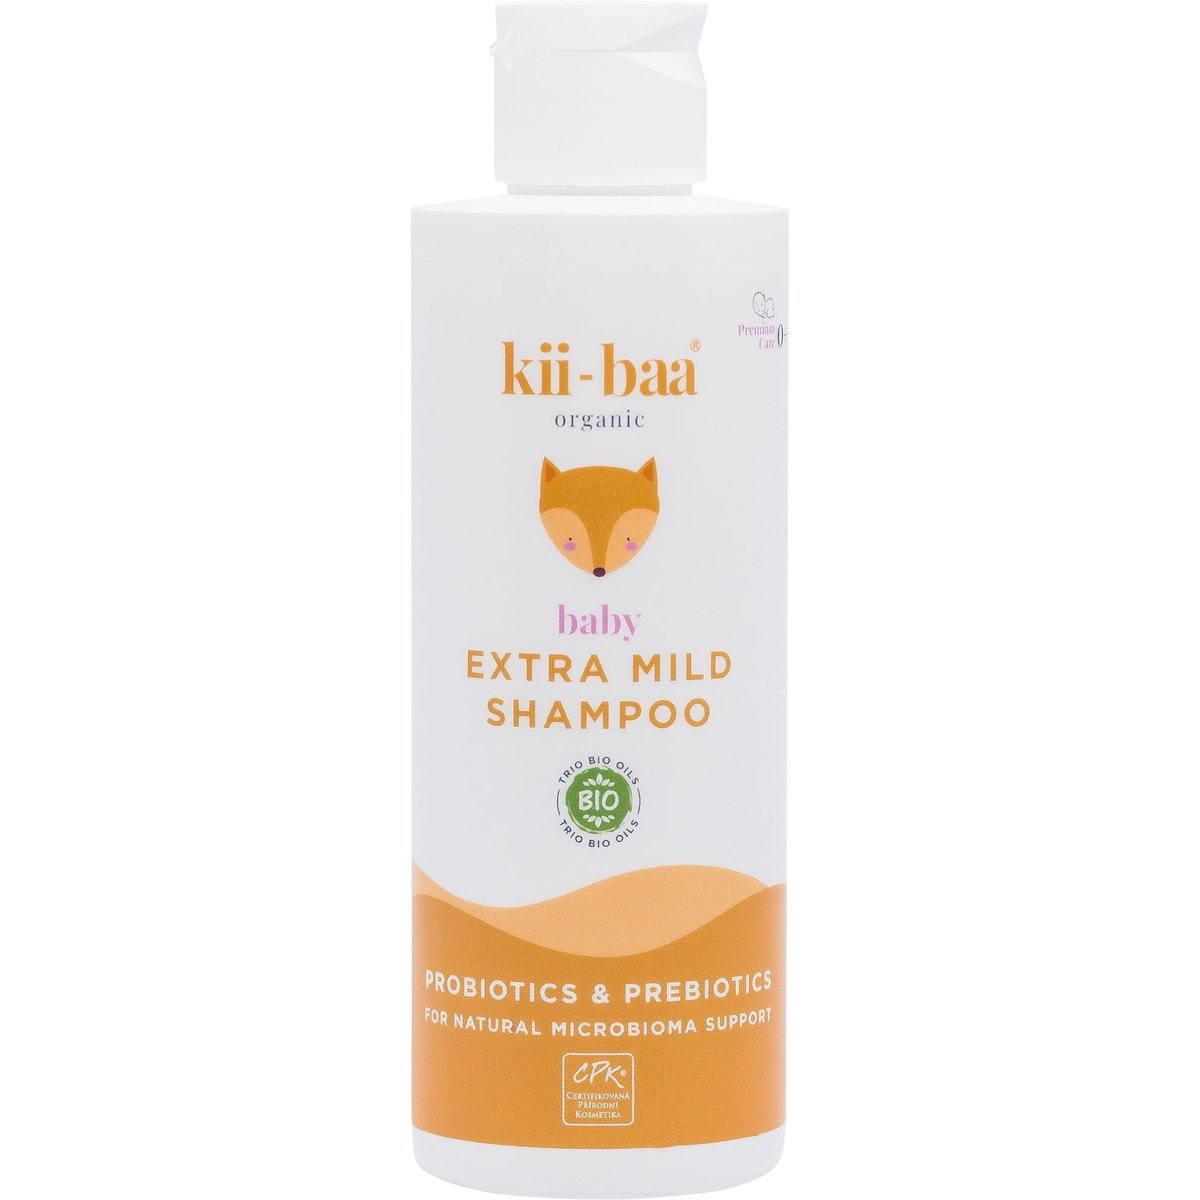 Kii-baa Organic BIO Extra jemný šampon s pro/prebiotiky 0+